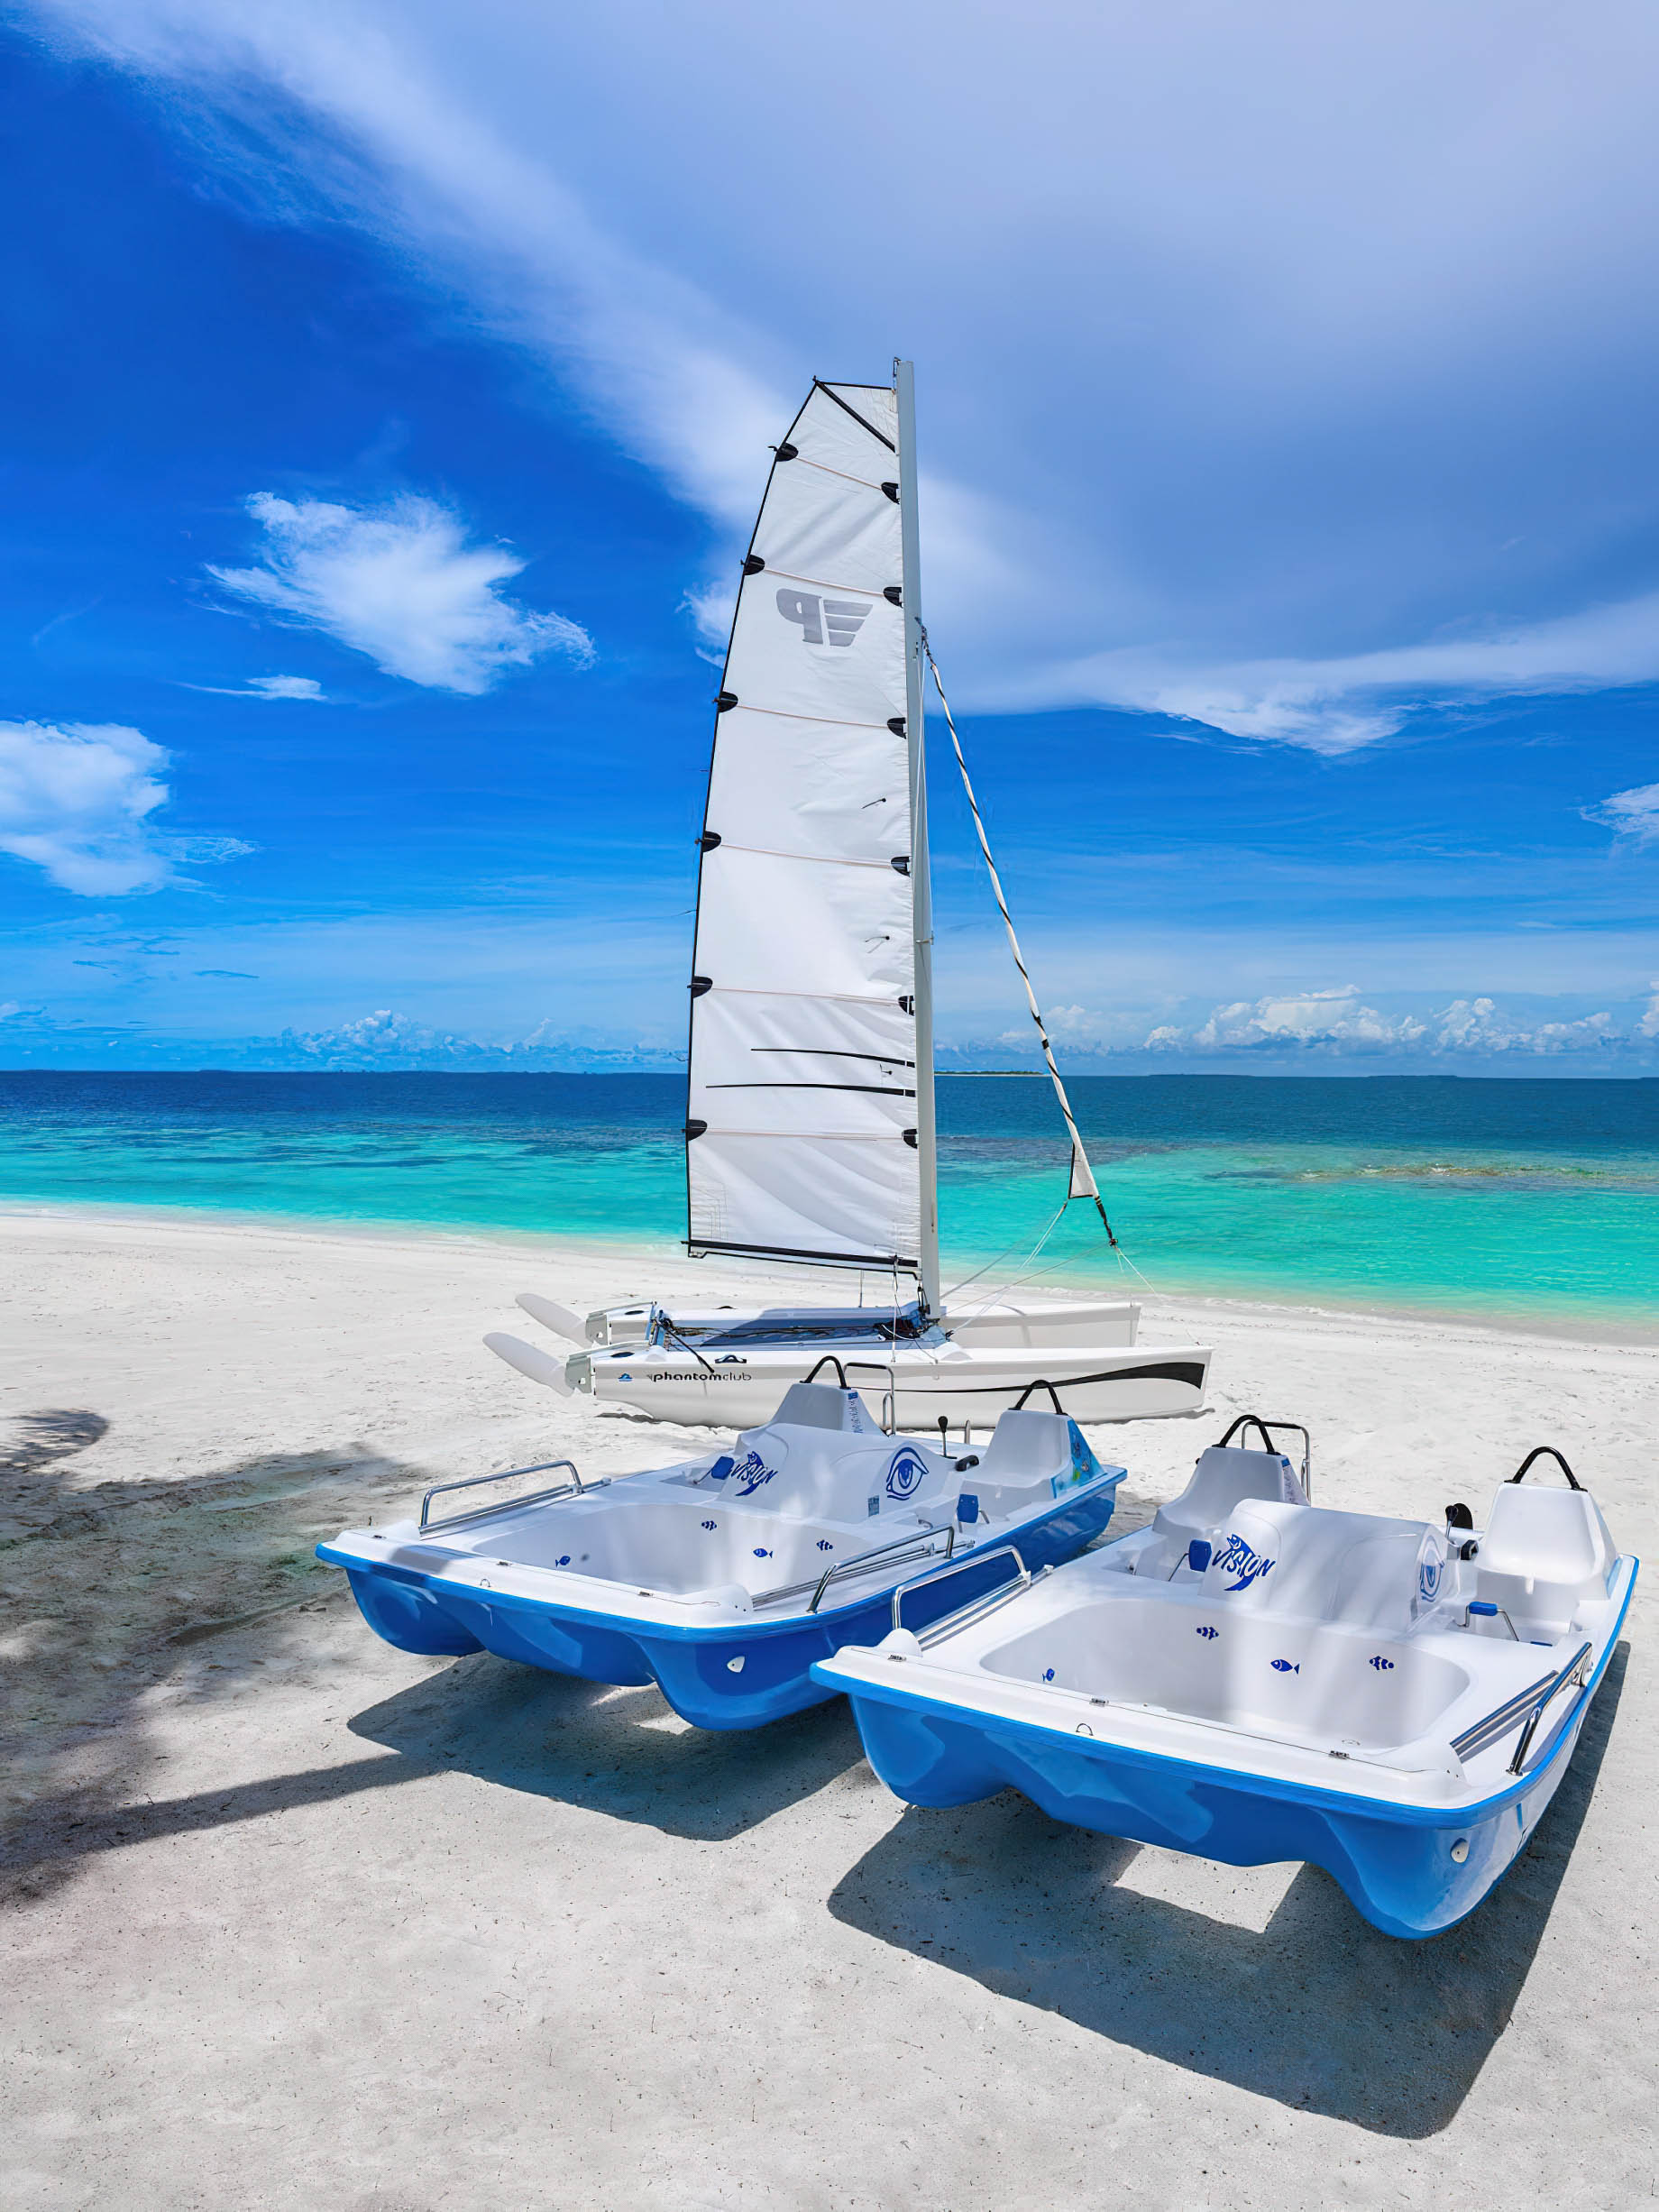 JOALI Maldives Resort – Muravandhoo Island, Maldives – Paddle and Sail Boats